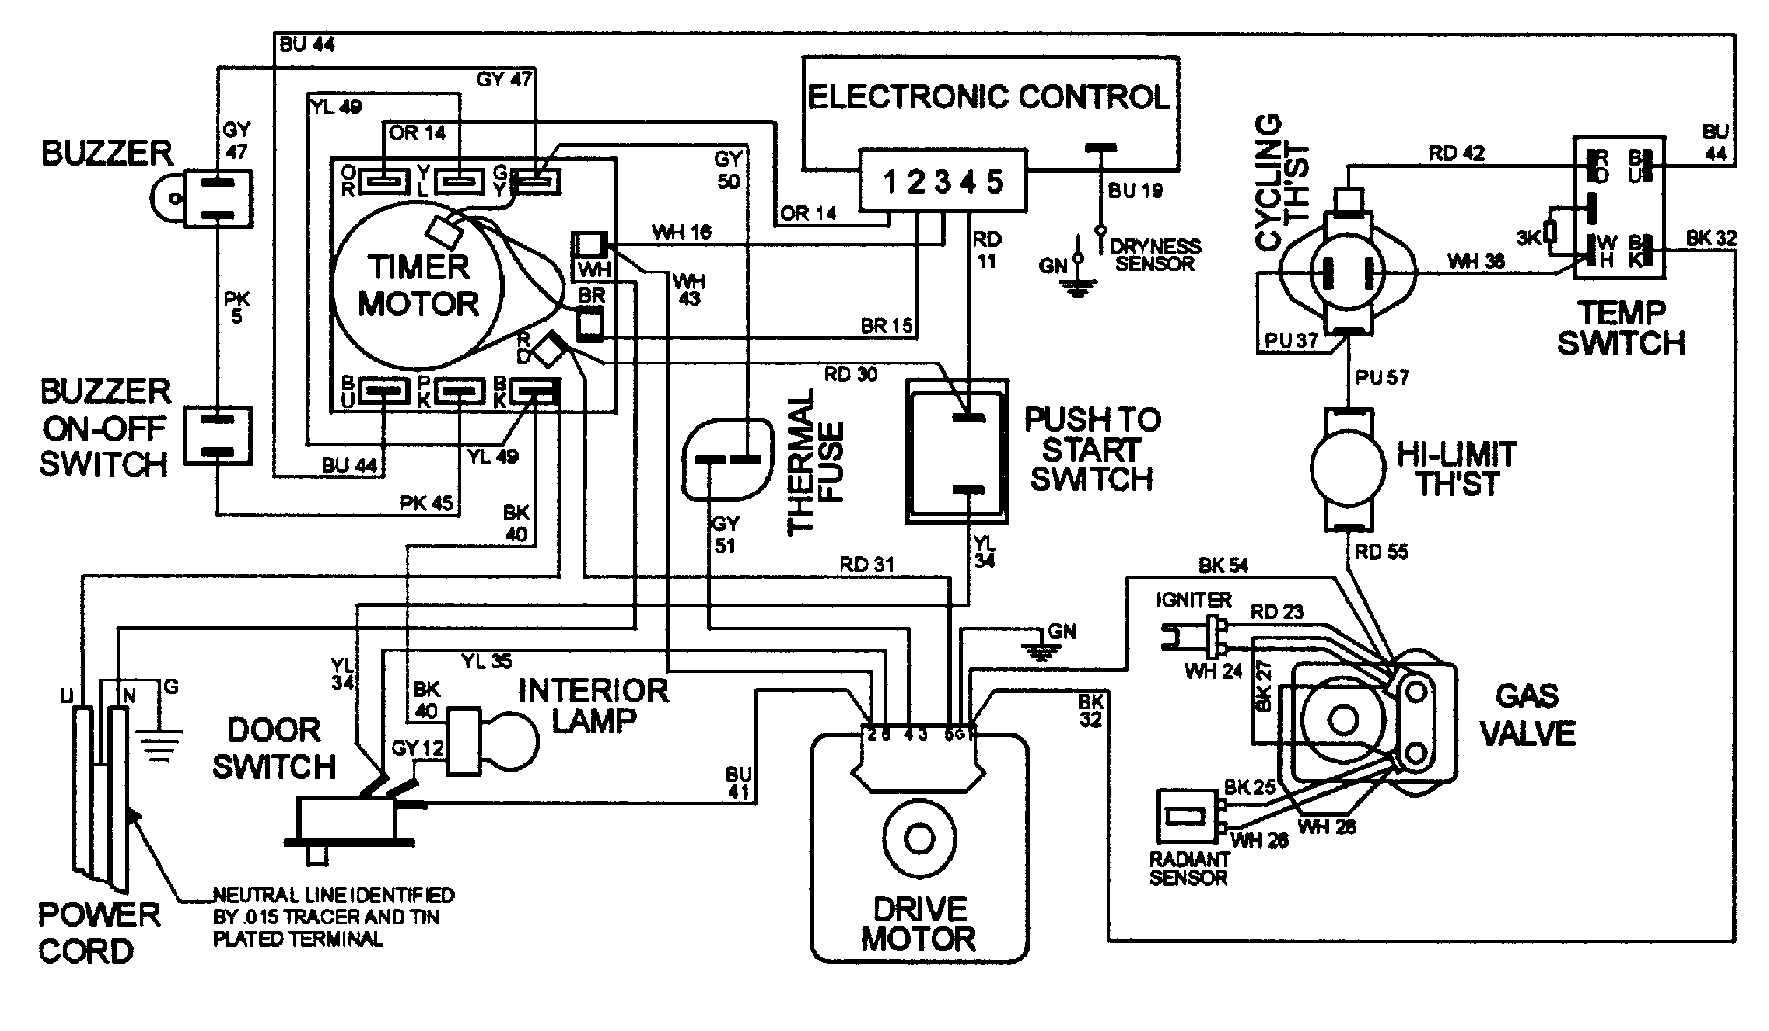 Wiring Diagram For Maytag Centennial Dryer - Wiring Diagram